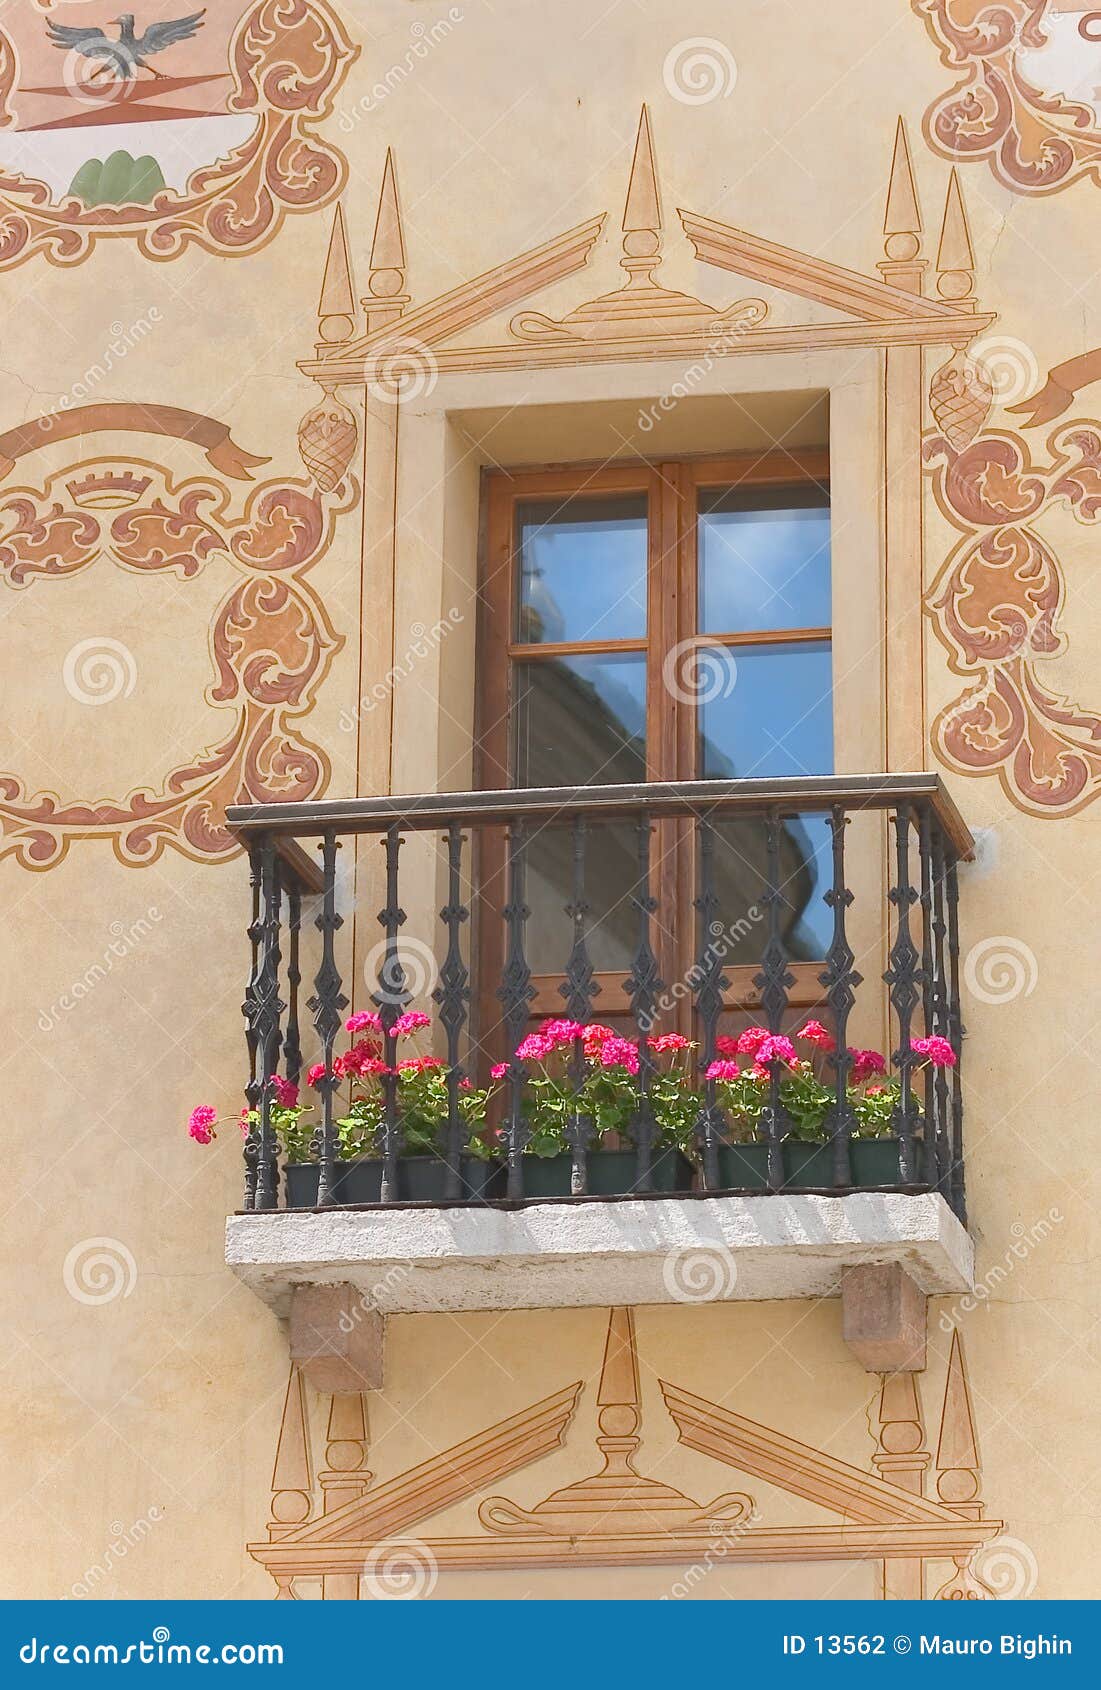 cortina window - dolomites - italy